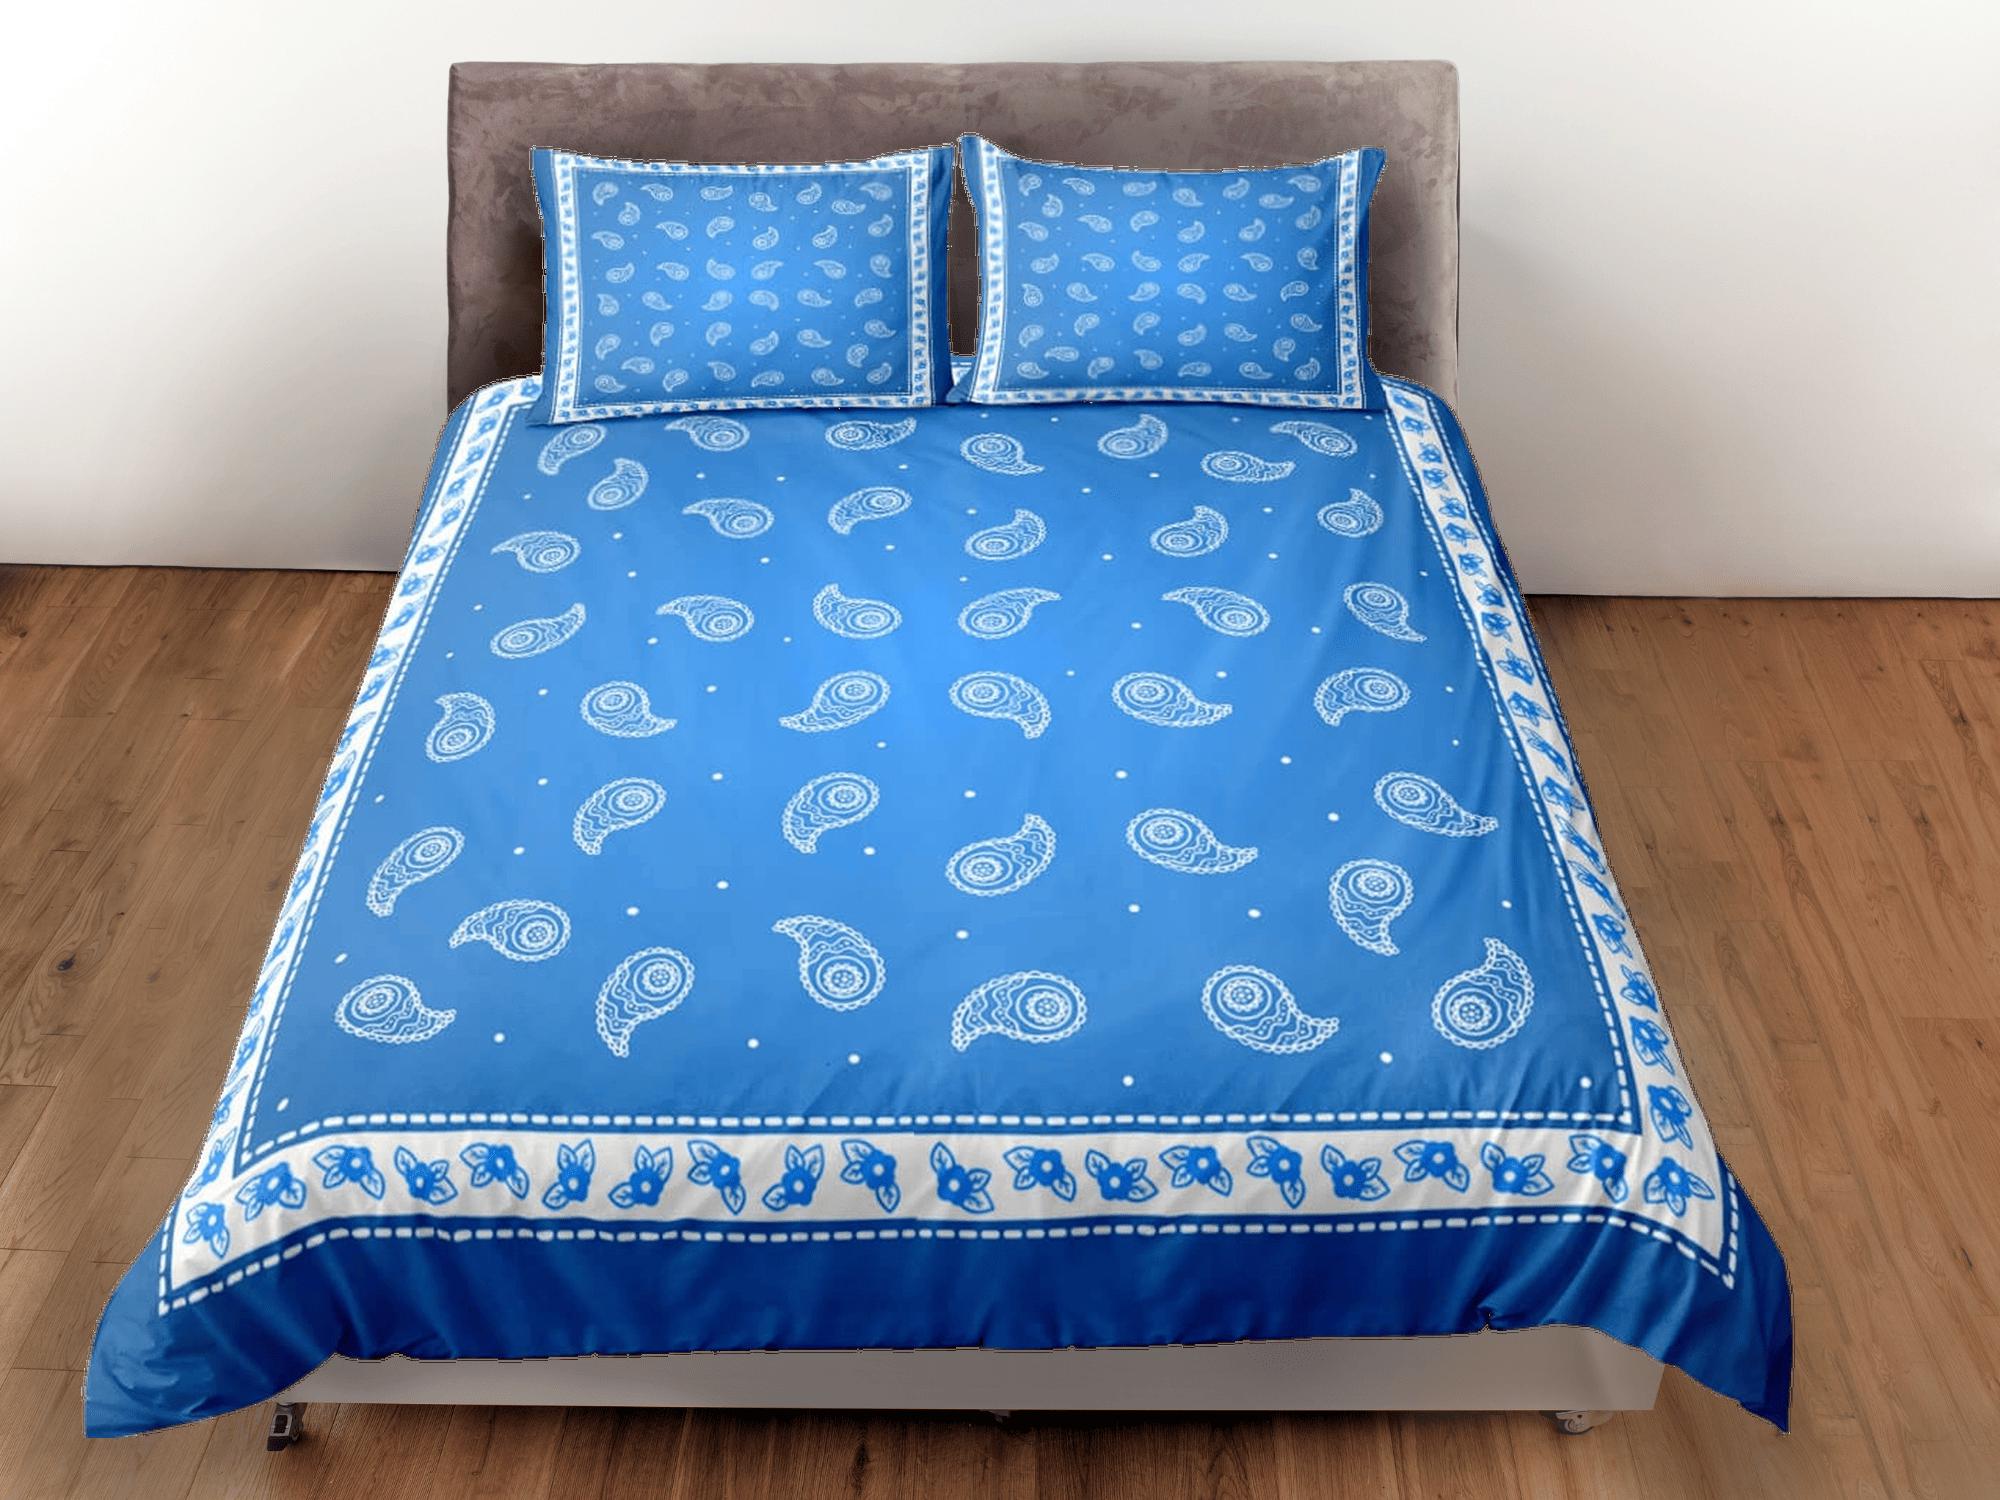 daintyduvet Blue bandana paisley duvet cover set, aesthetic room decor bedding set full, king, queen size, abstract boho bedspread, luxury bed cover